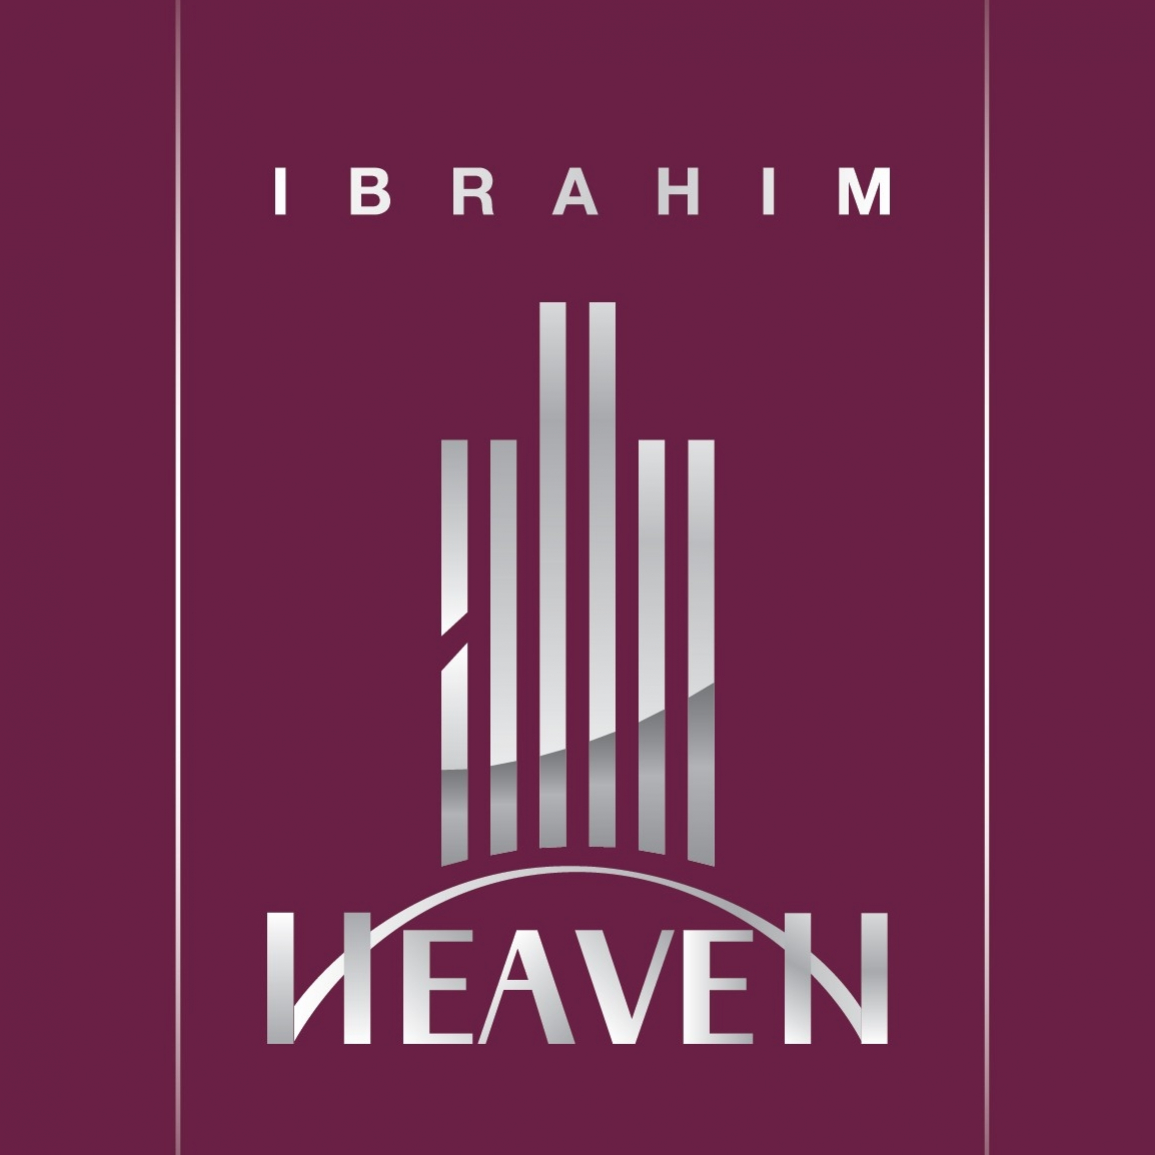 IbrahimHeaven